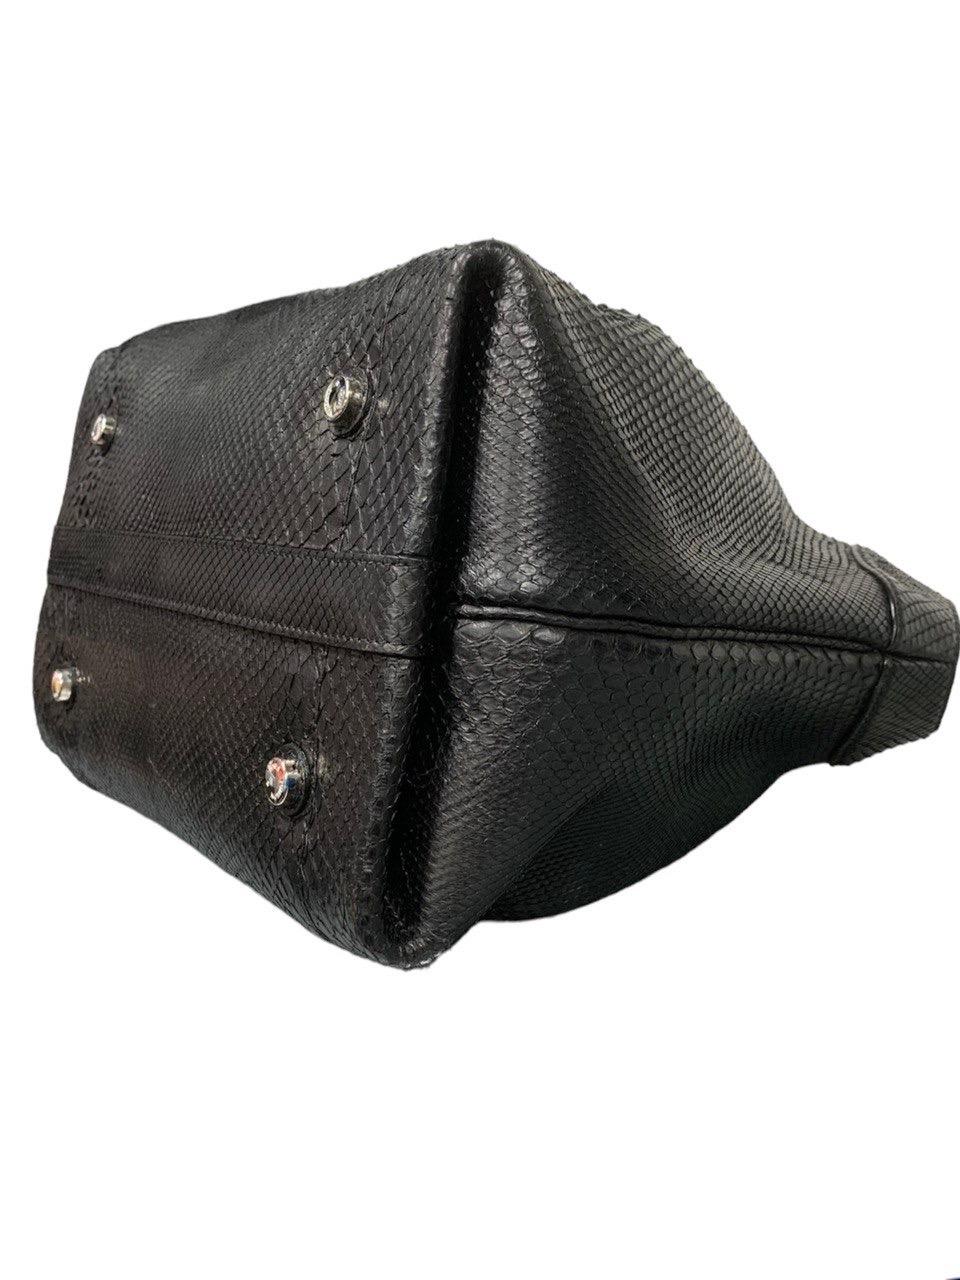 Louis Vuitton Mahina Cirrus Black Piton Top Handle Bag For Sale 1